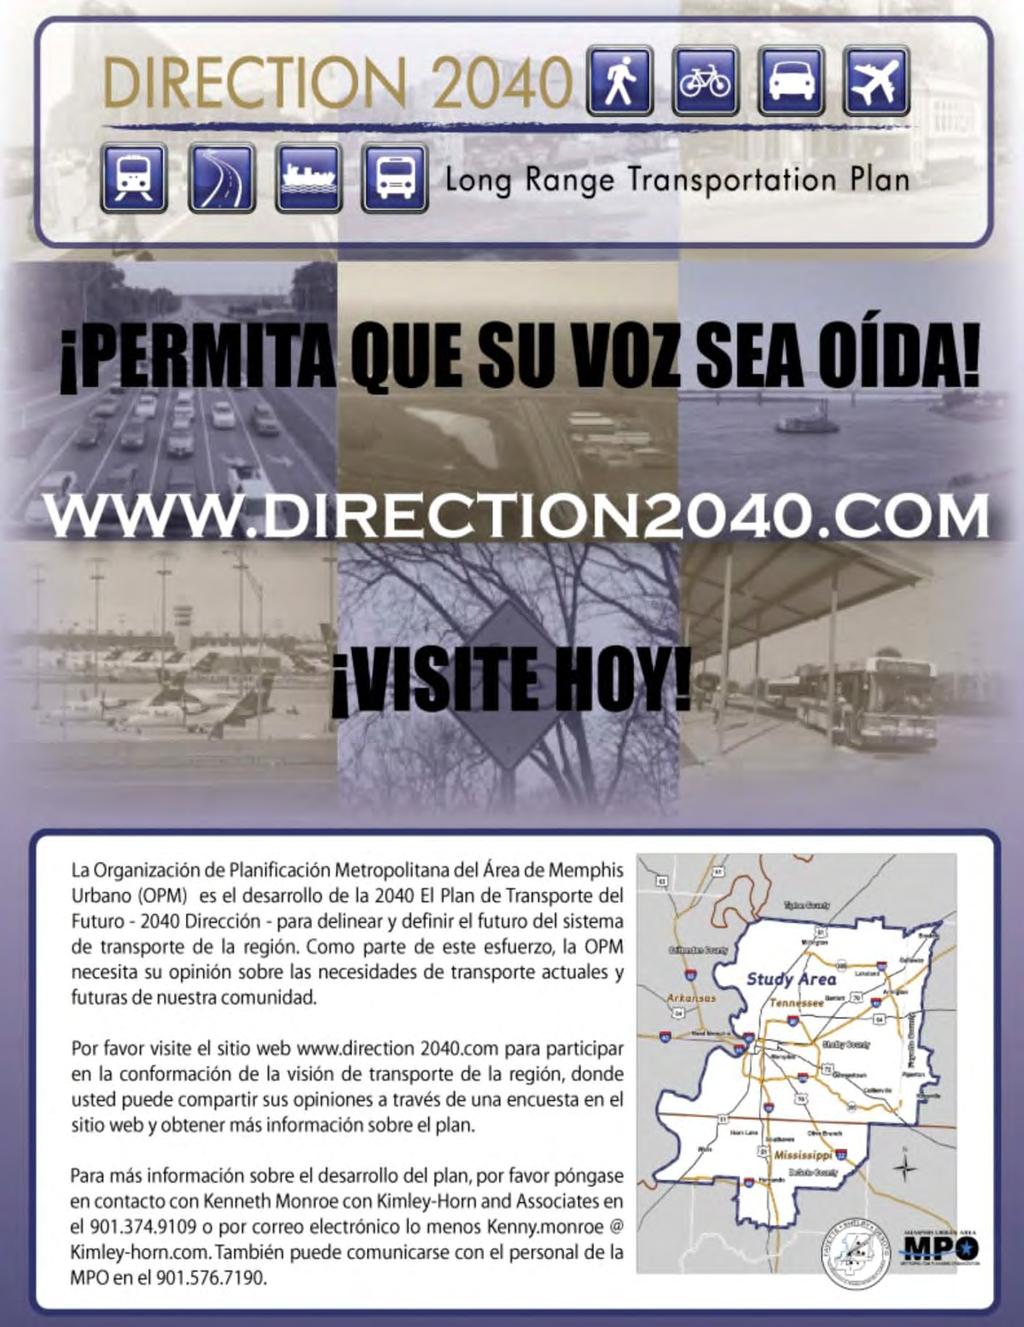 Figure 10: Spanish Language Direction 2040 LRTP Poster